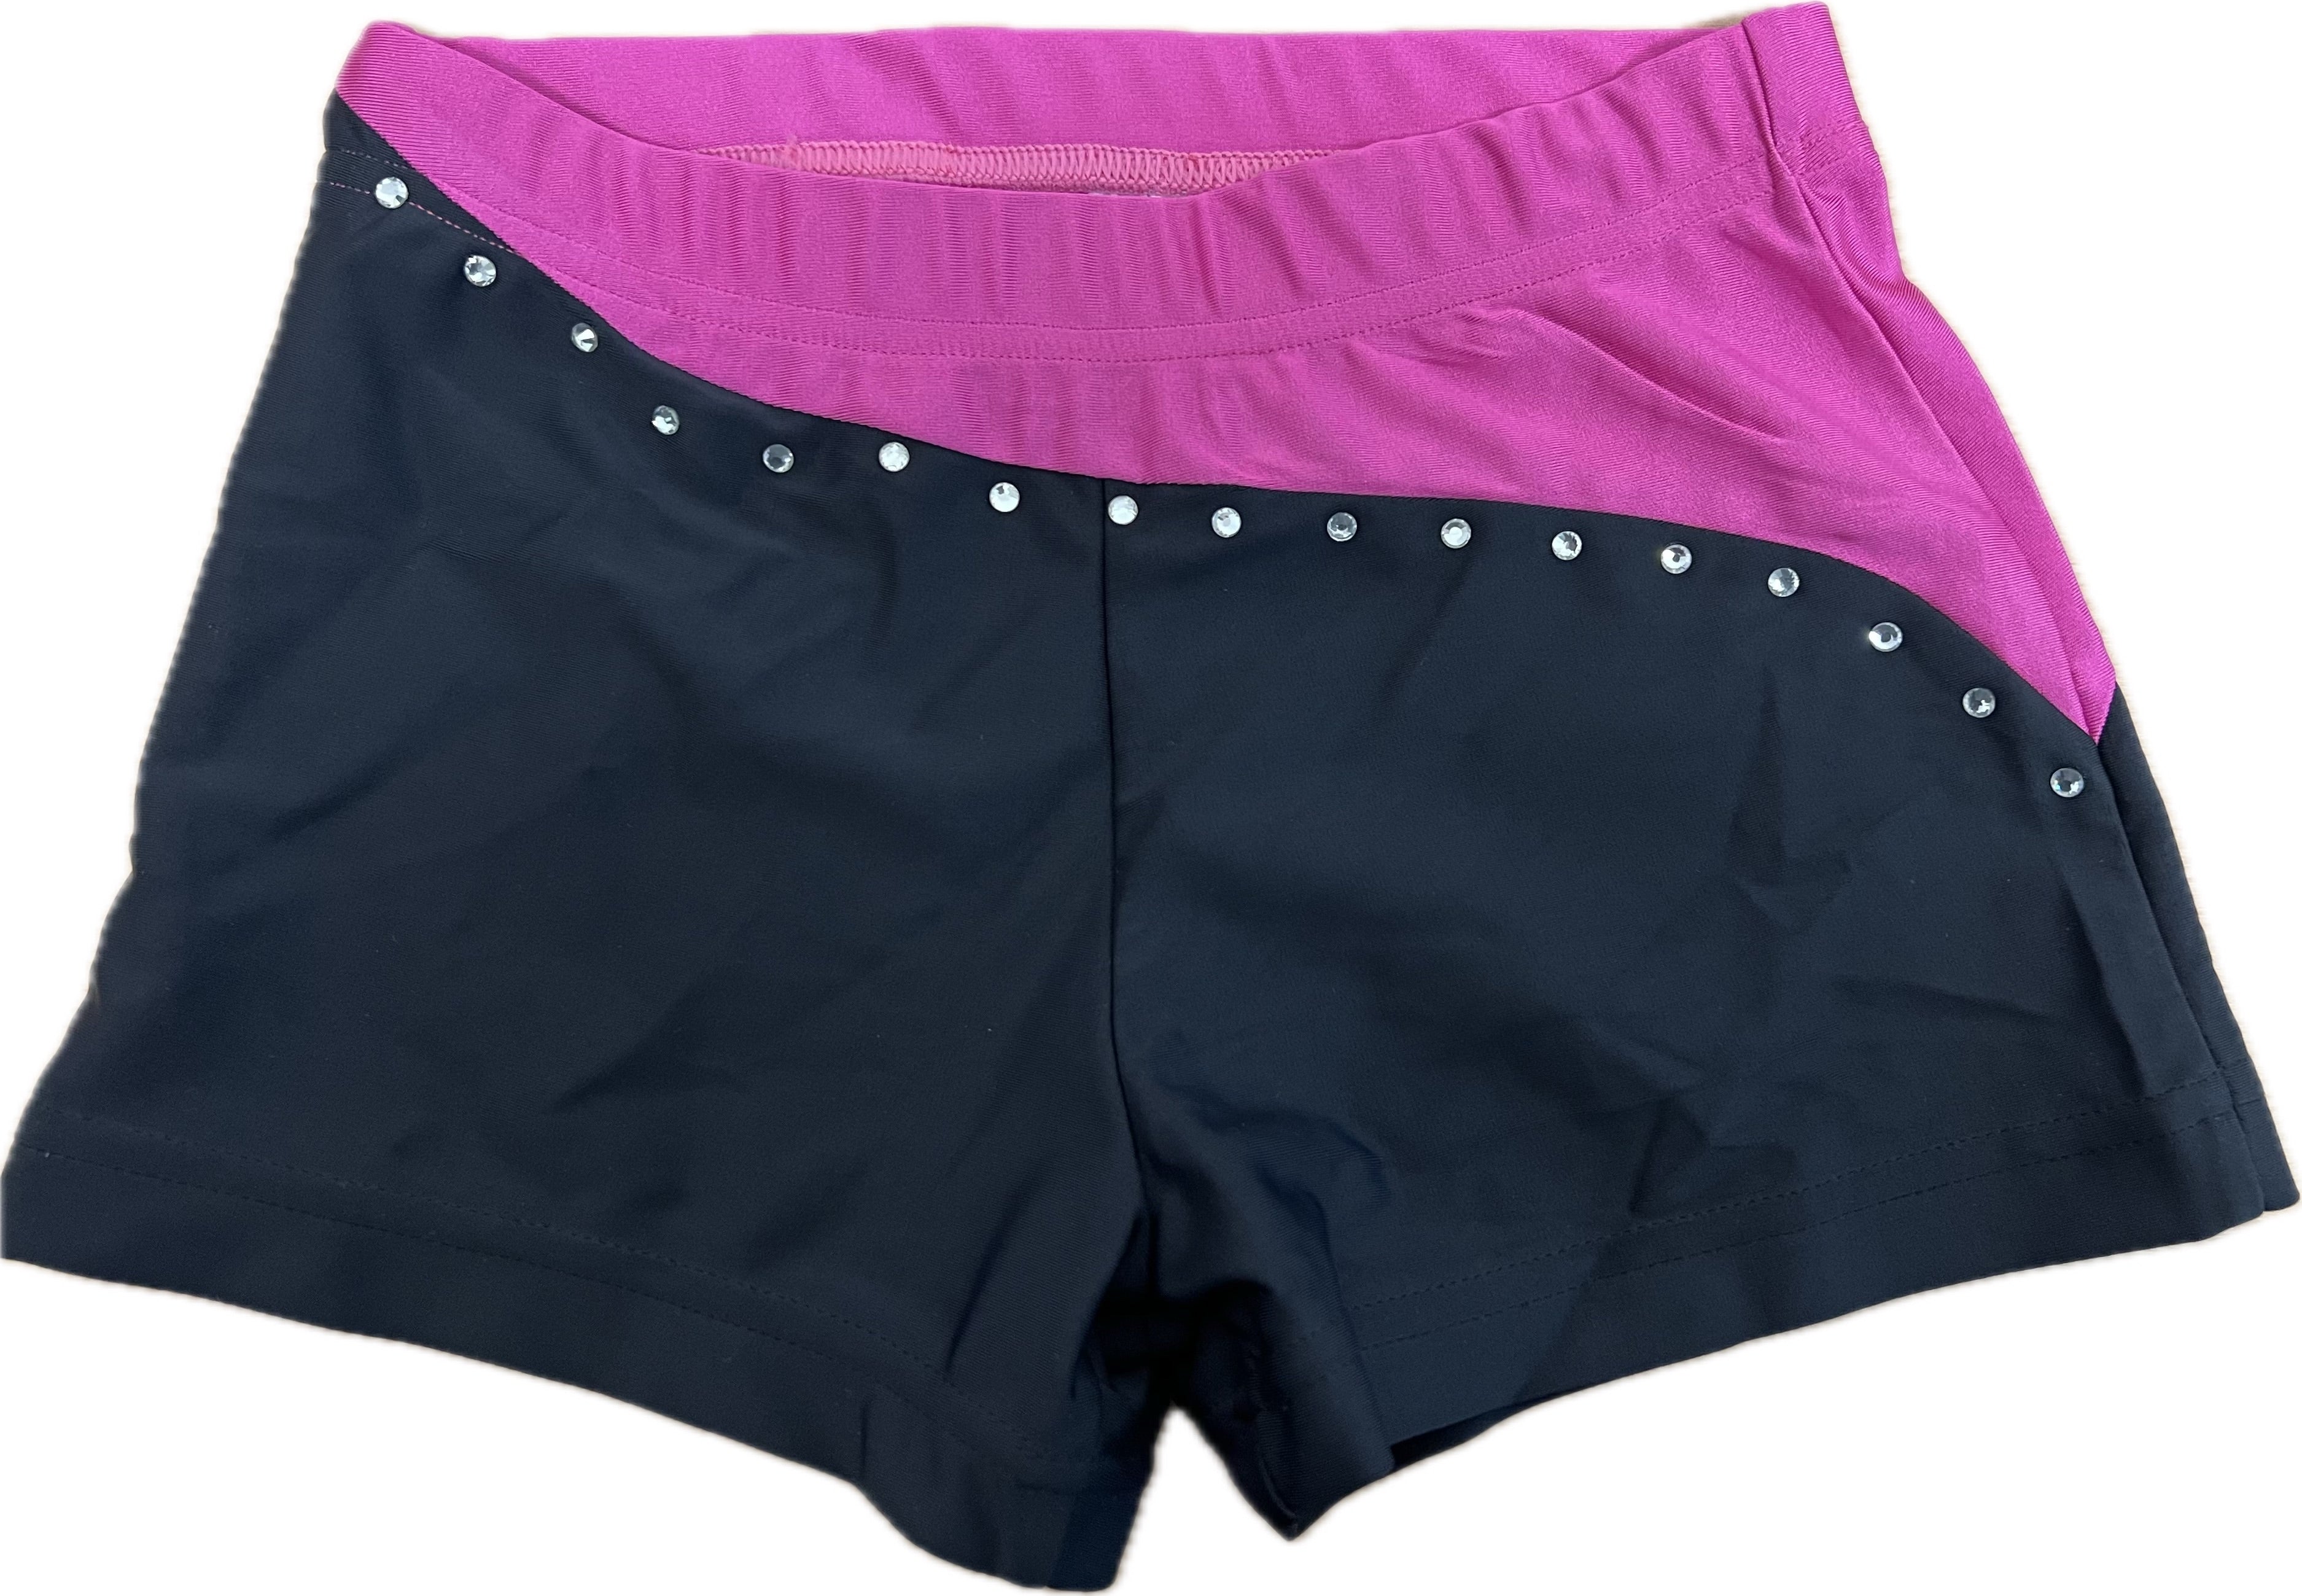 Black and Pink Shorts - RSD